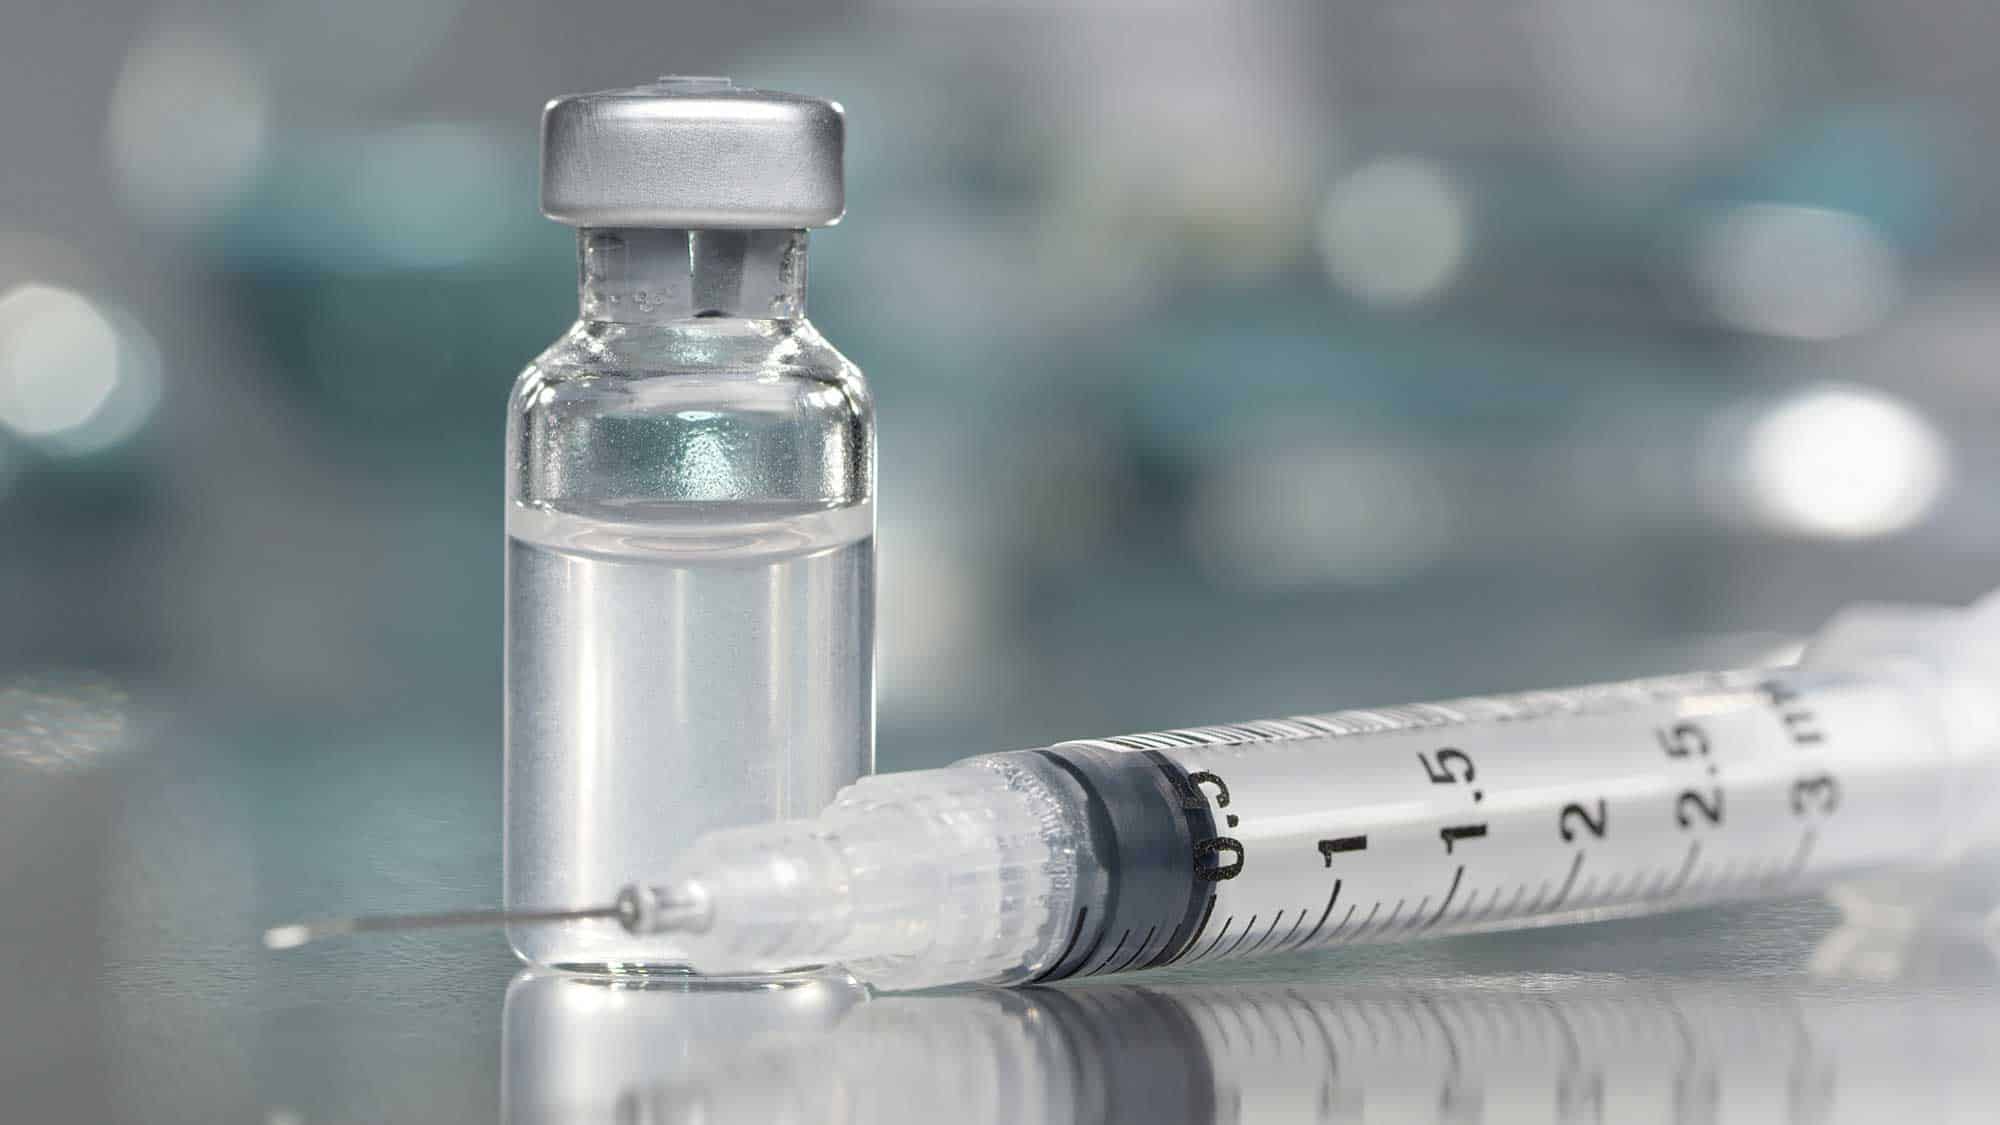 Syringe and bottle of medical liquid